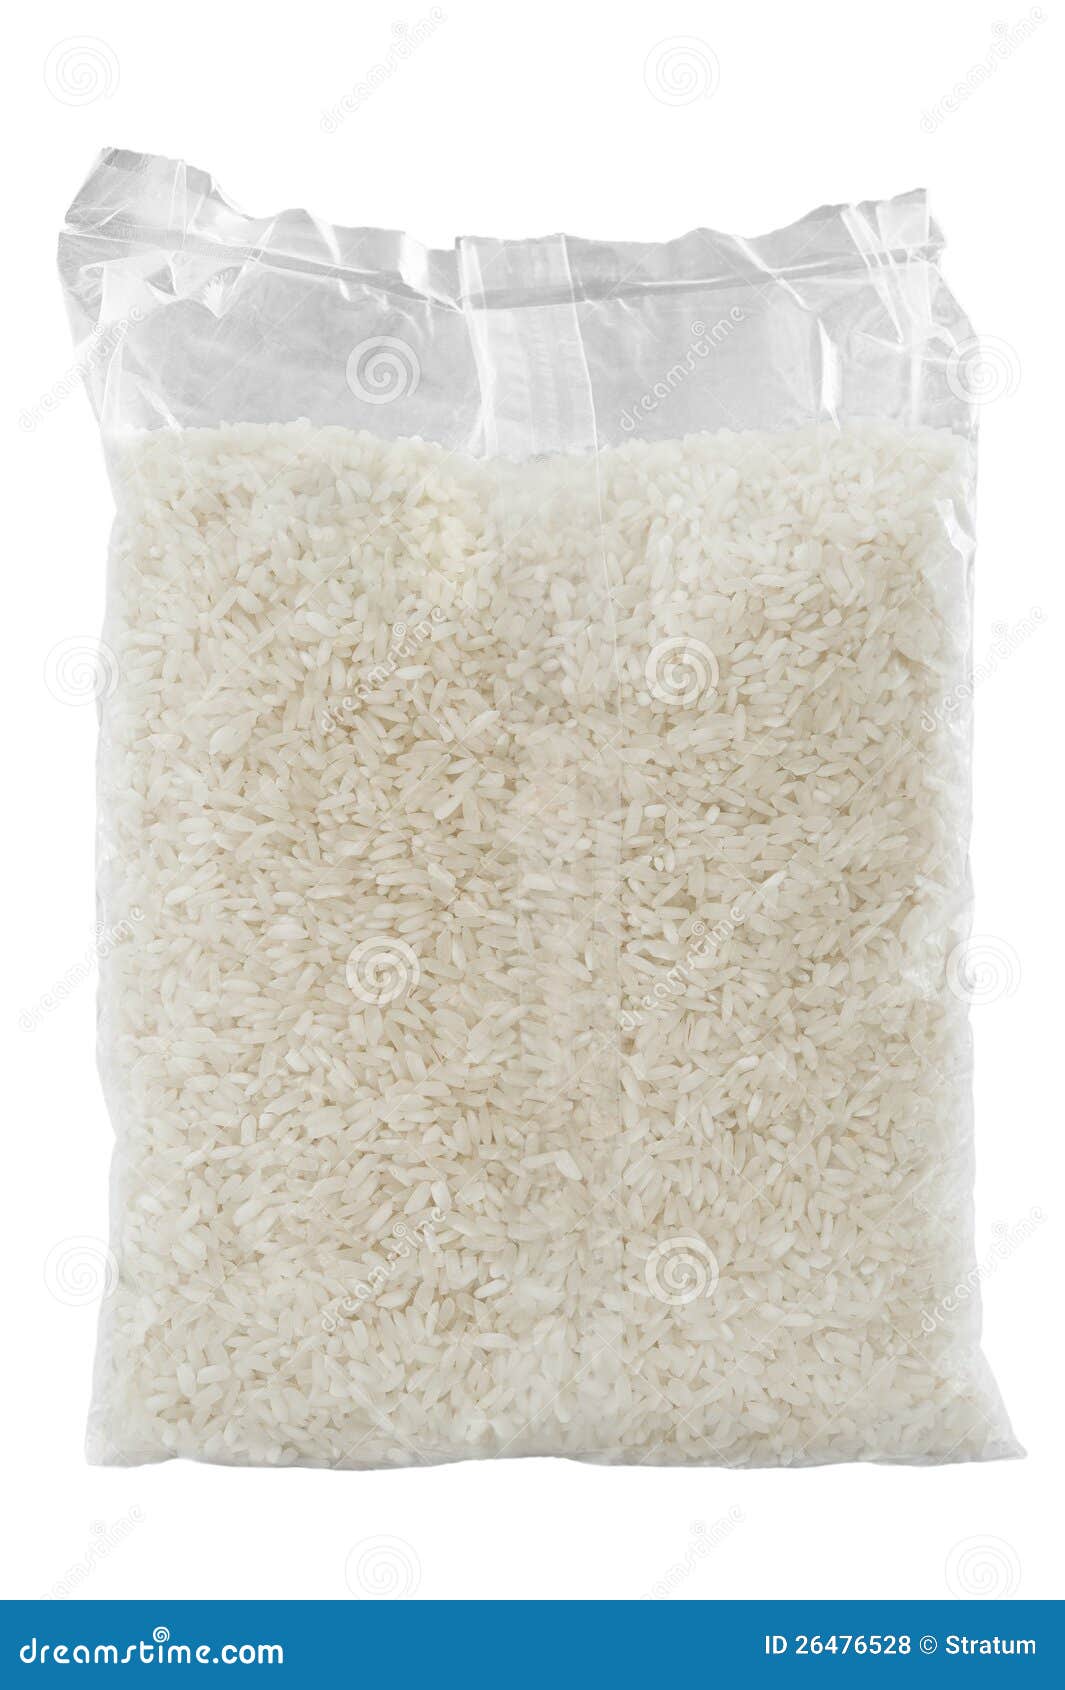 Success Boil-in-Bag Rice, Aromatic Jasmine Rice, 14 oz, 4 Bags - Walmart.com